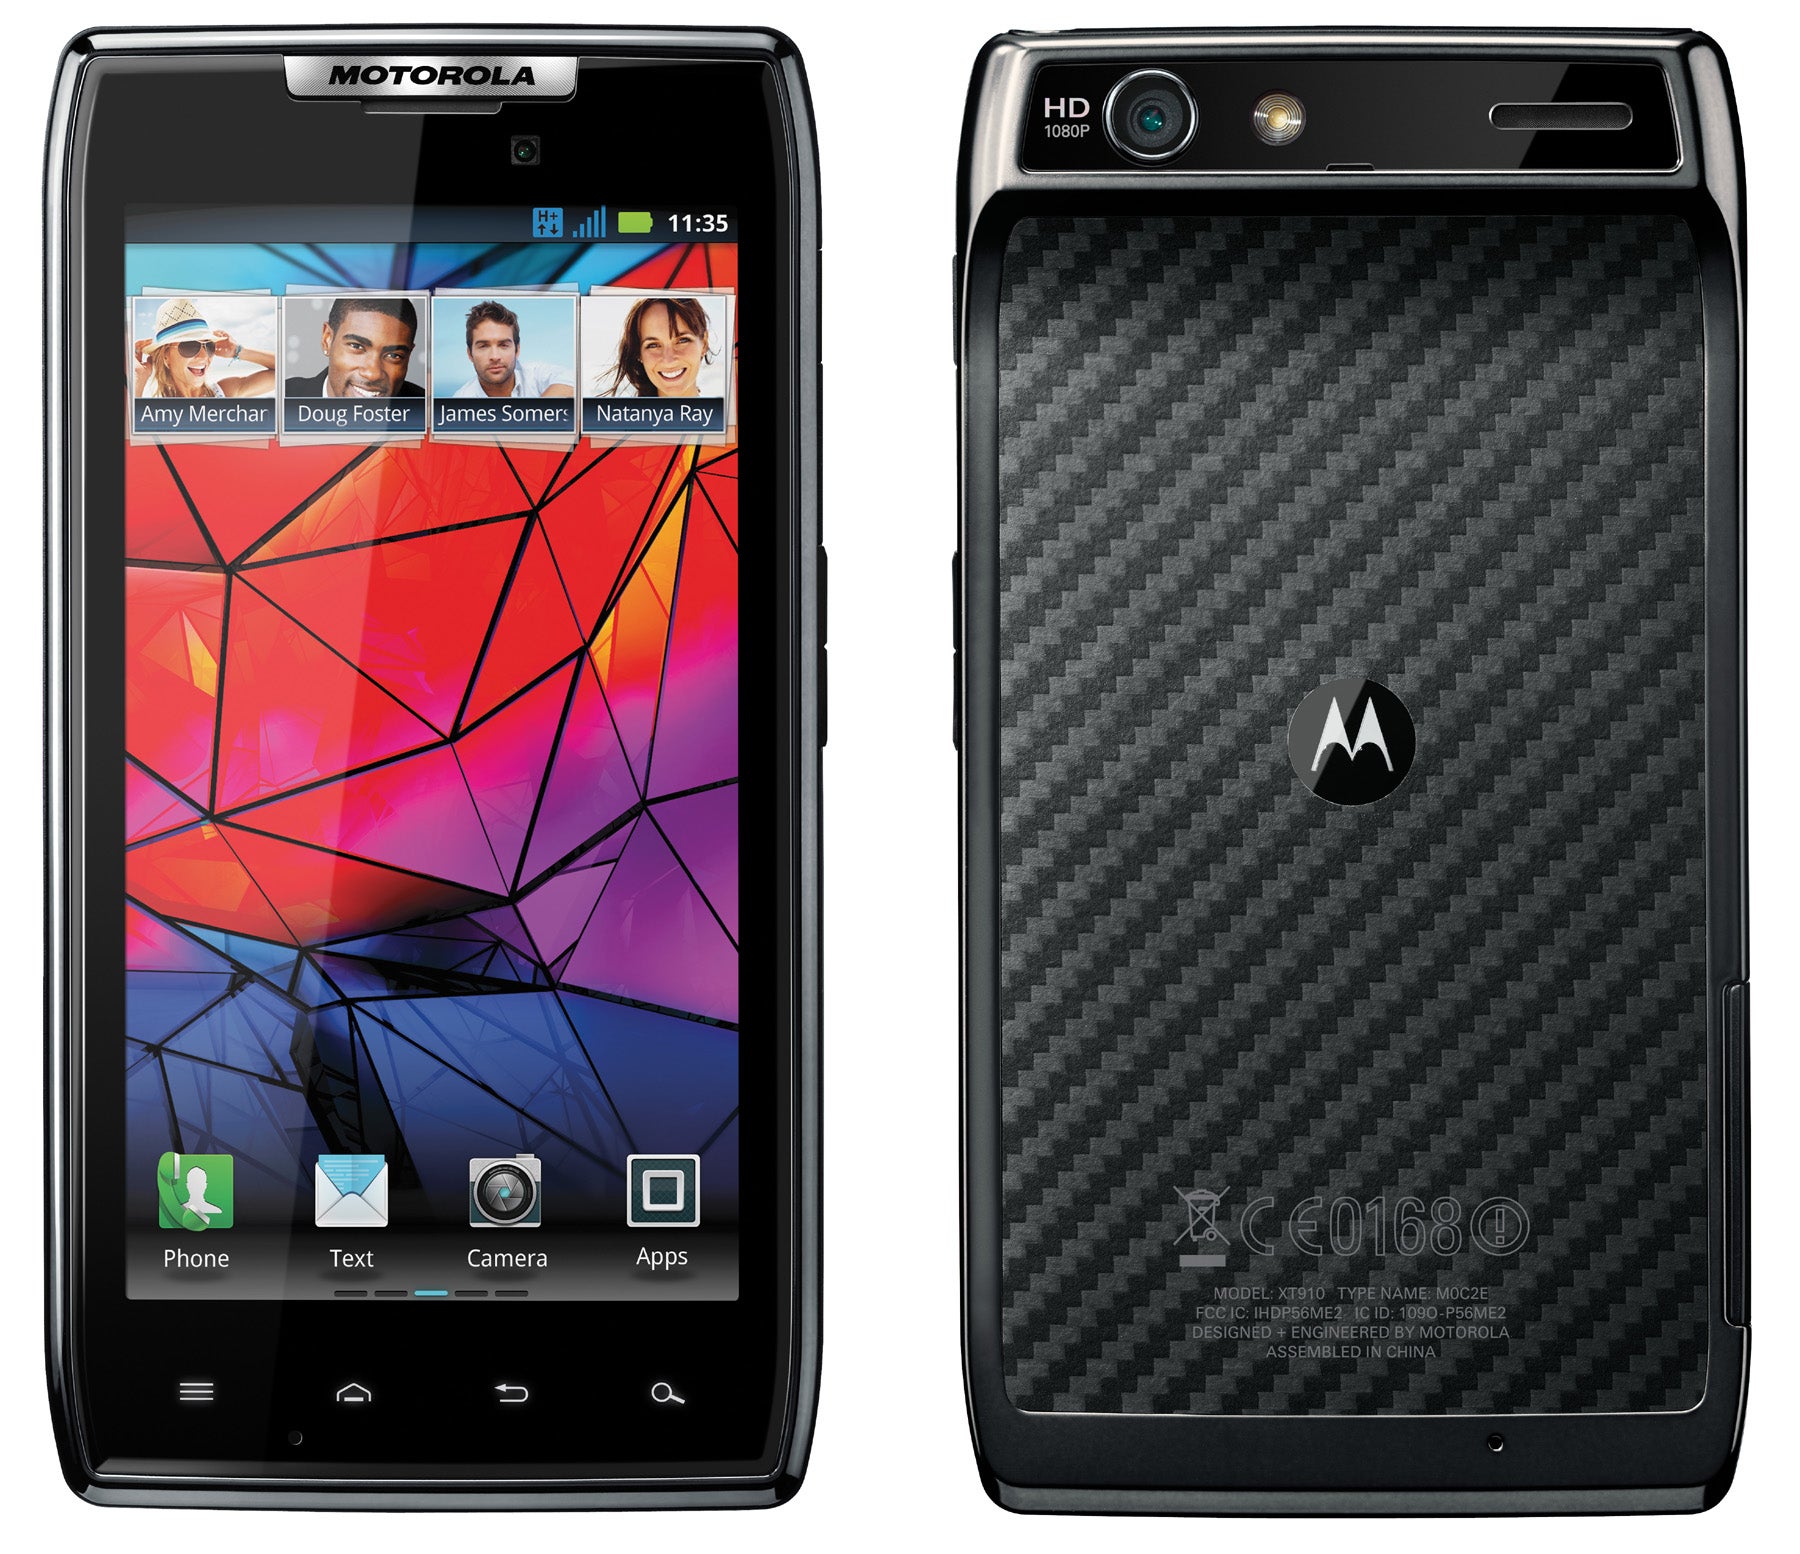 The Motorola RAZR - Select users of GSM Motorola RAZR and Motorola RAZR MAXX are receiving Android 4.0 update